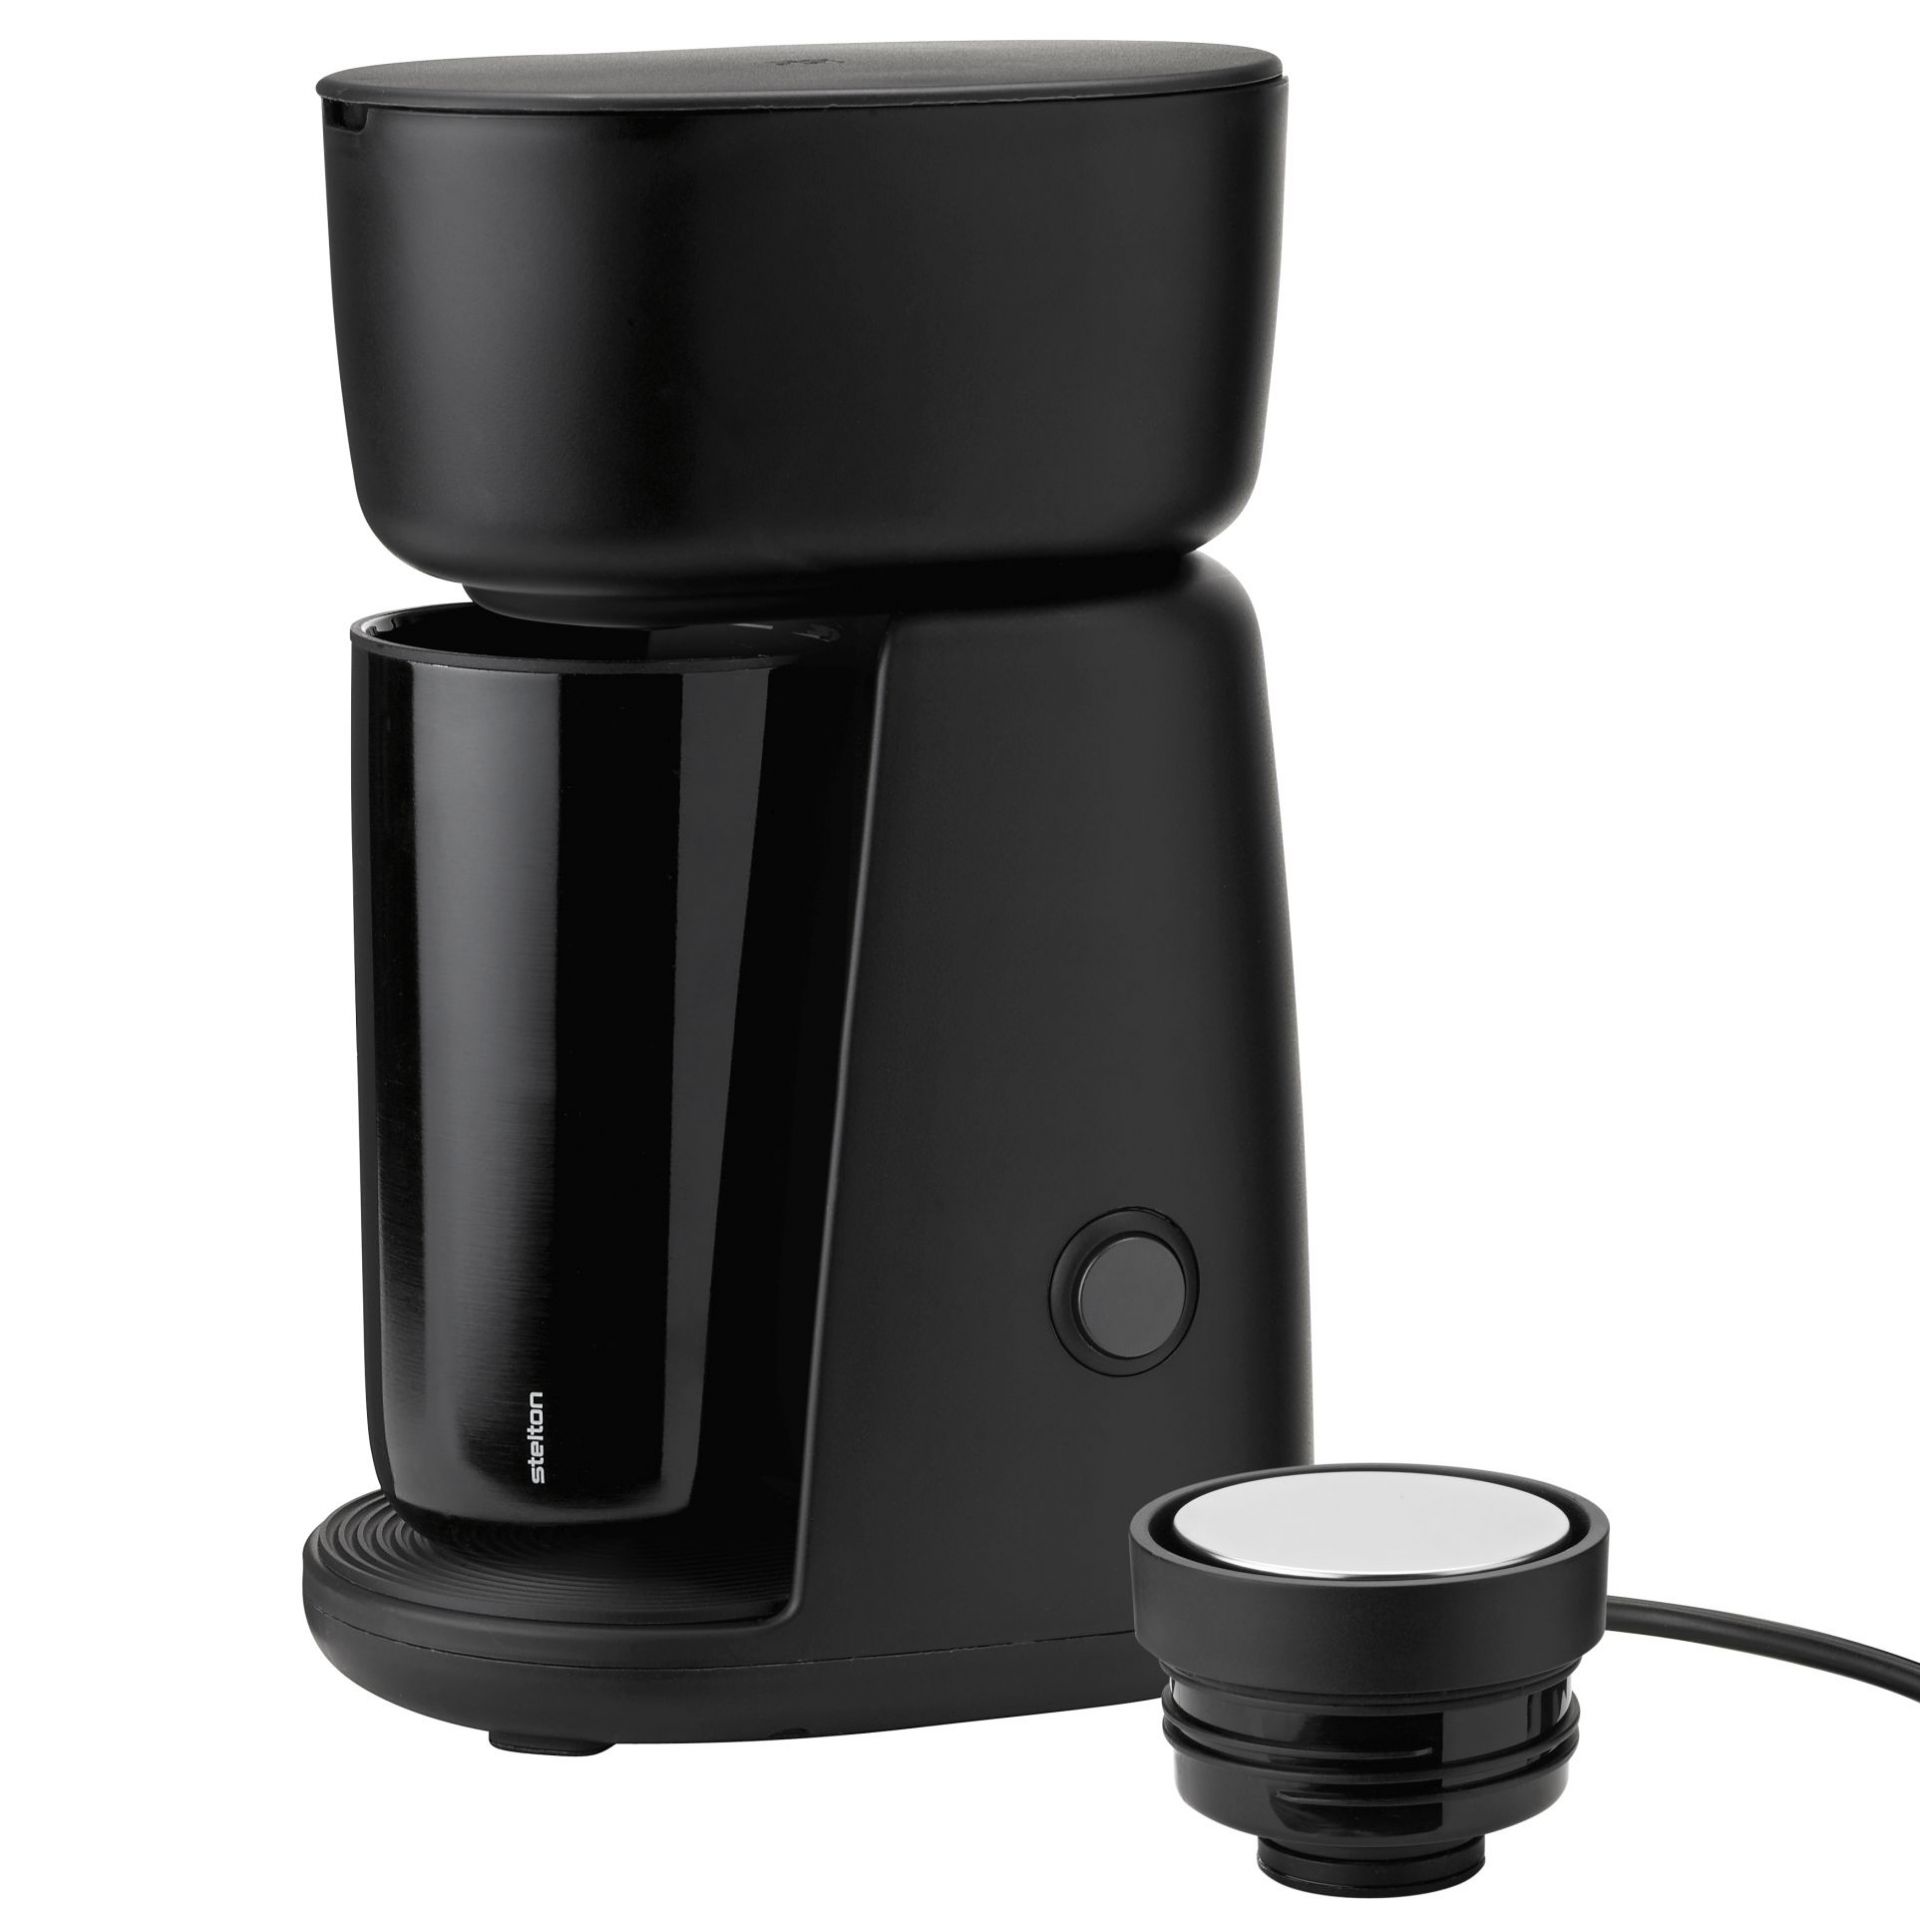 https://www.einrichten-design.com/thumbnail/ce/5d/06/1629812691/RIG_TIG_by_Stelton_OL_Z00608-1_FOODIE_single_cup_coffee_maker_black_3_1920x1920.jpg